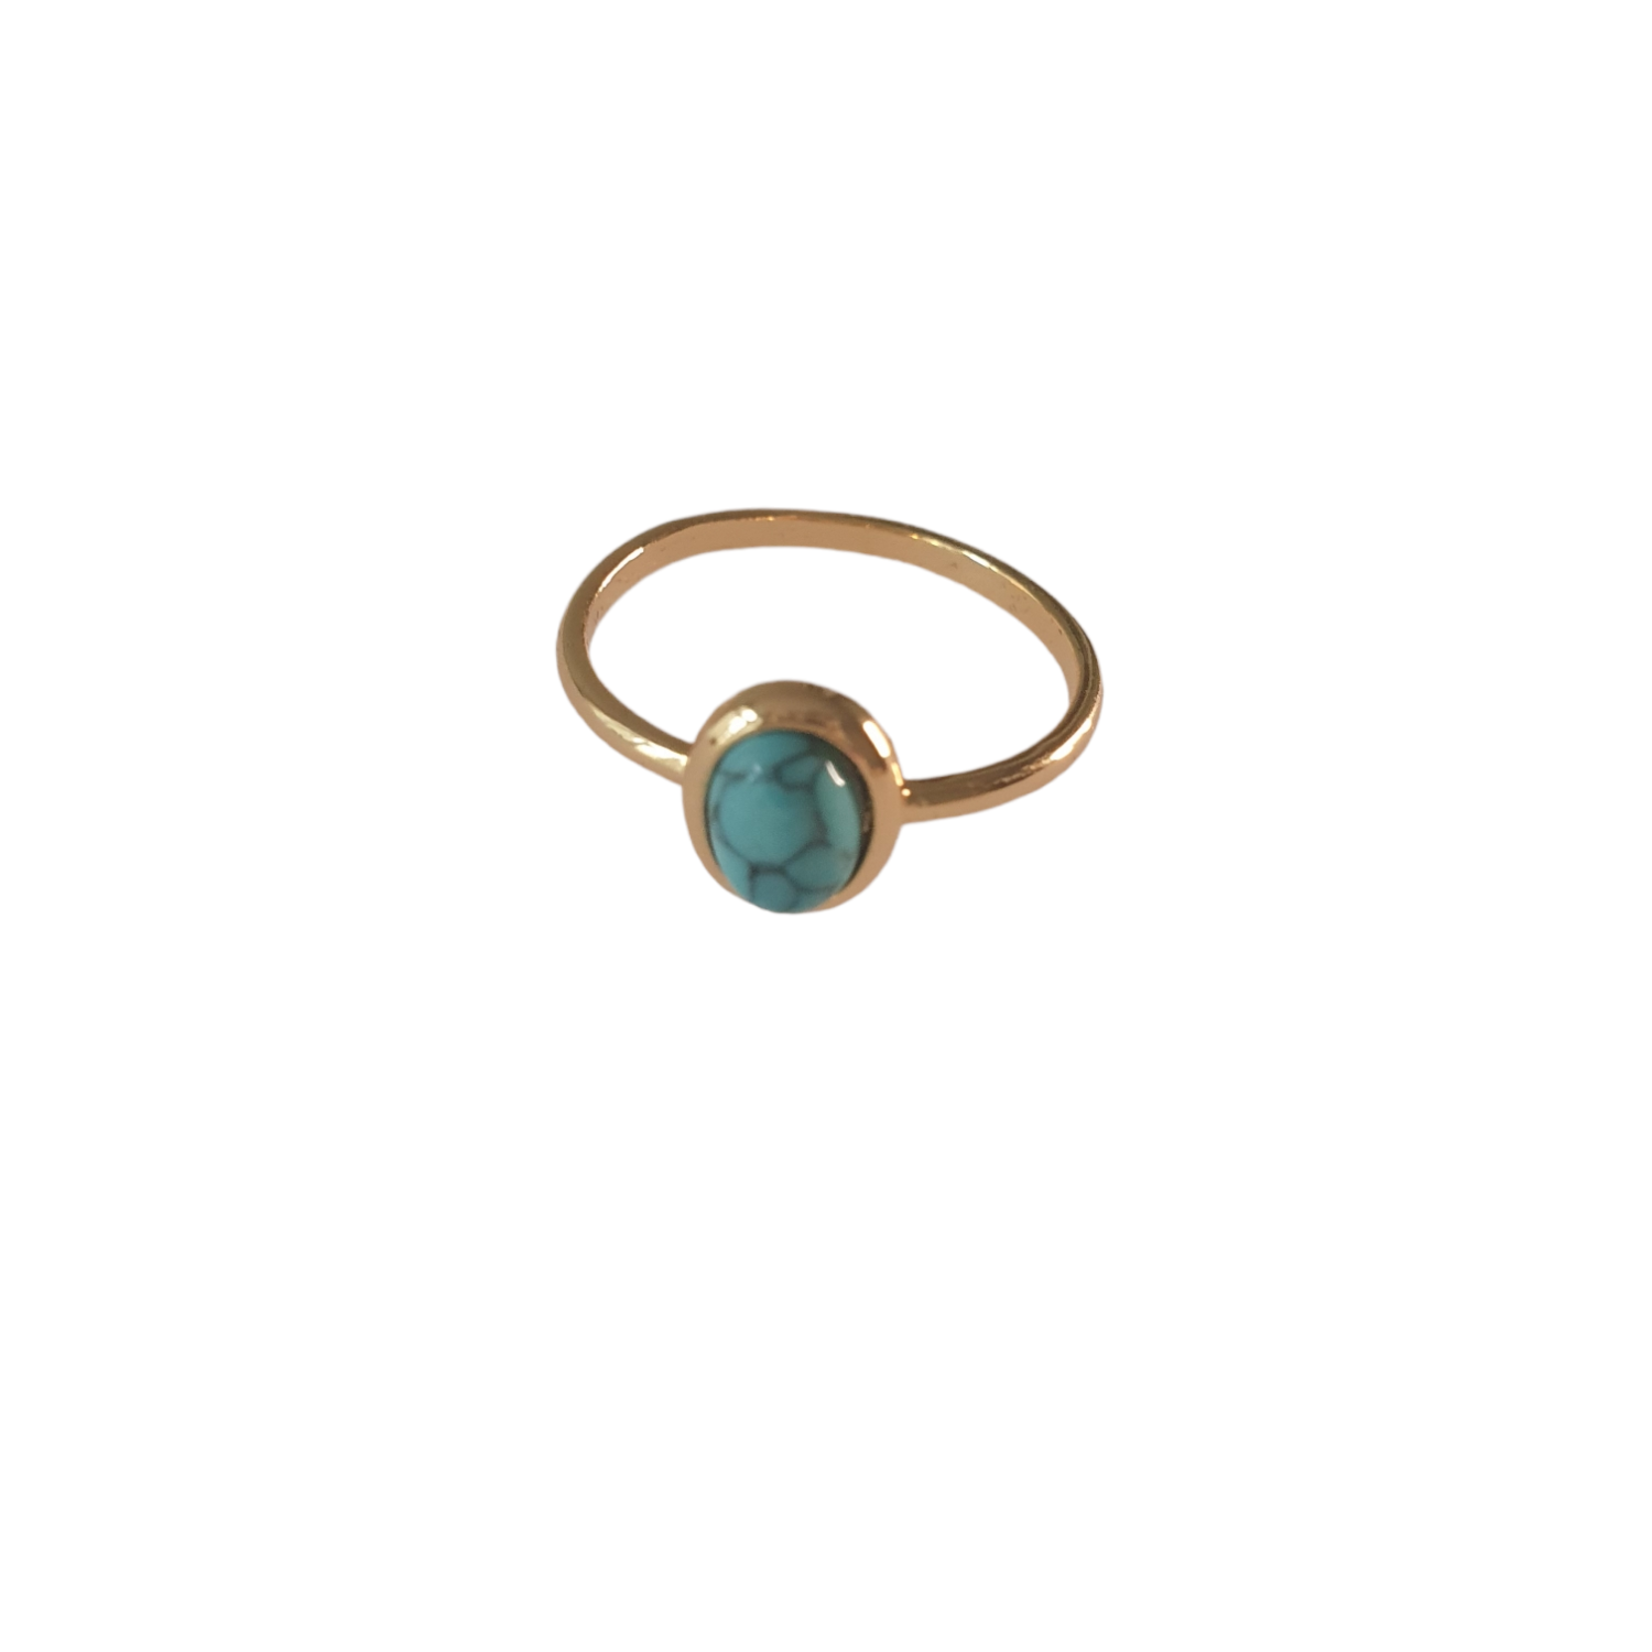 Eve's Gifts 14K vergulde ring met turquoise staand steentje